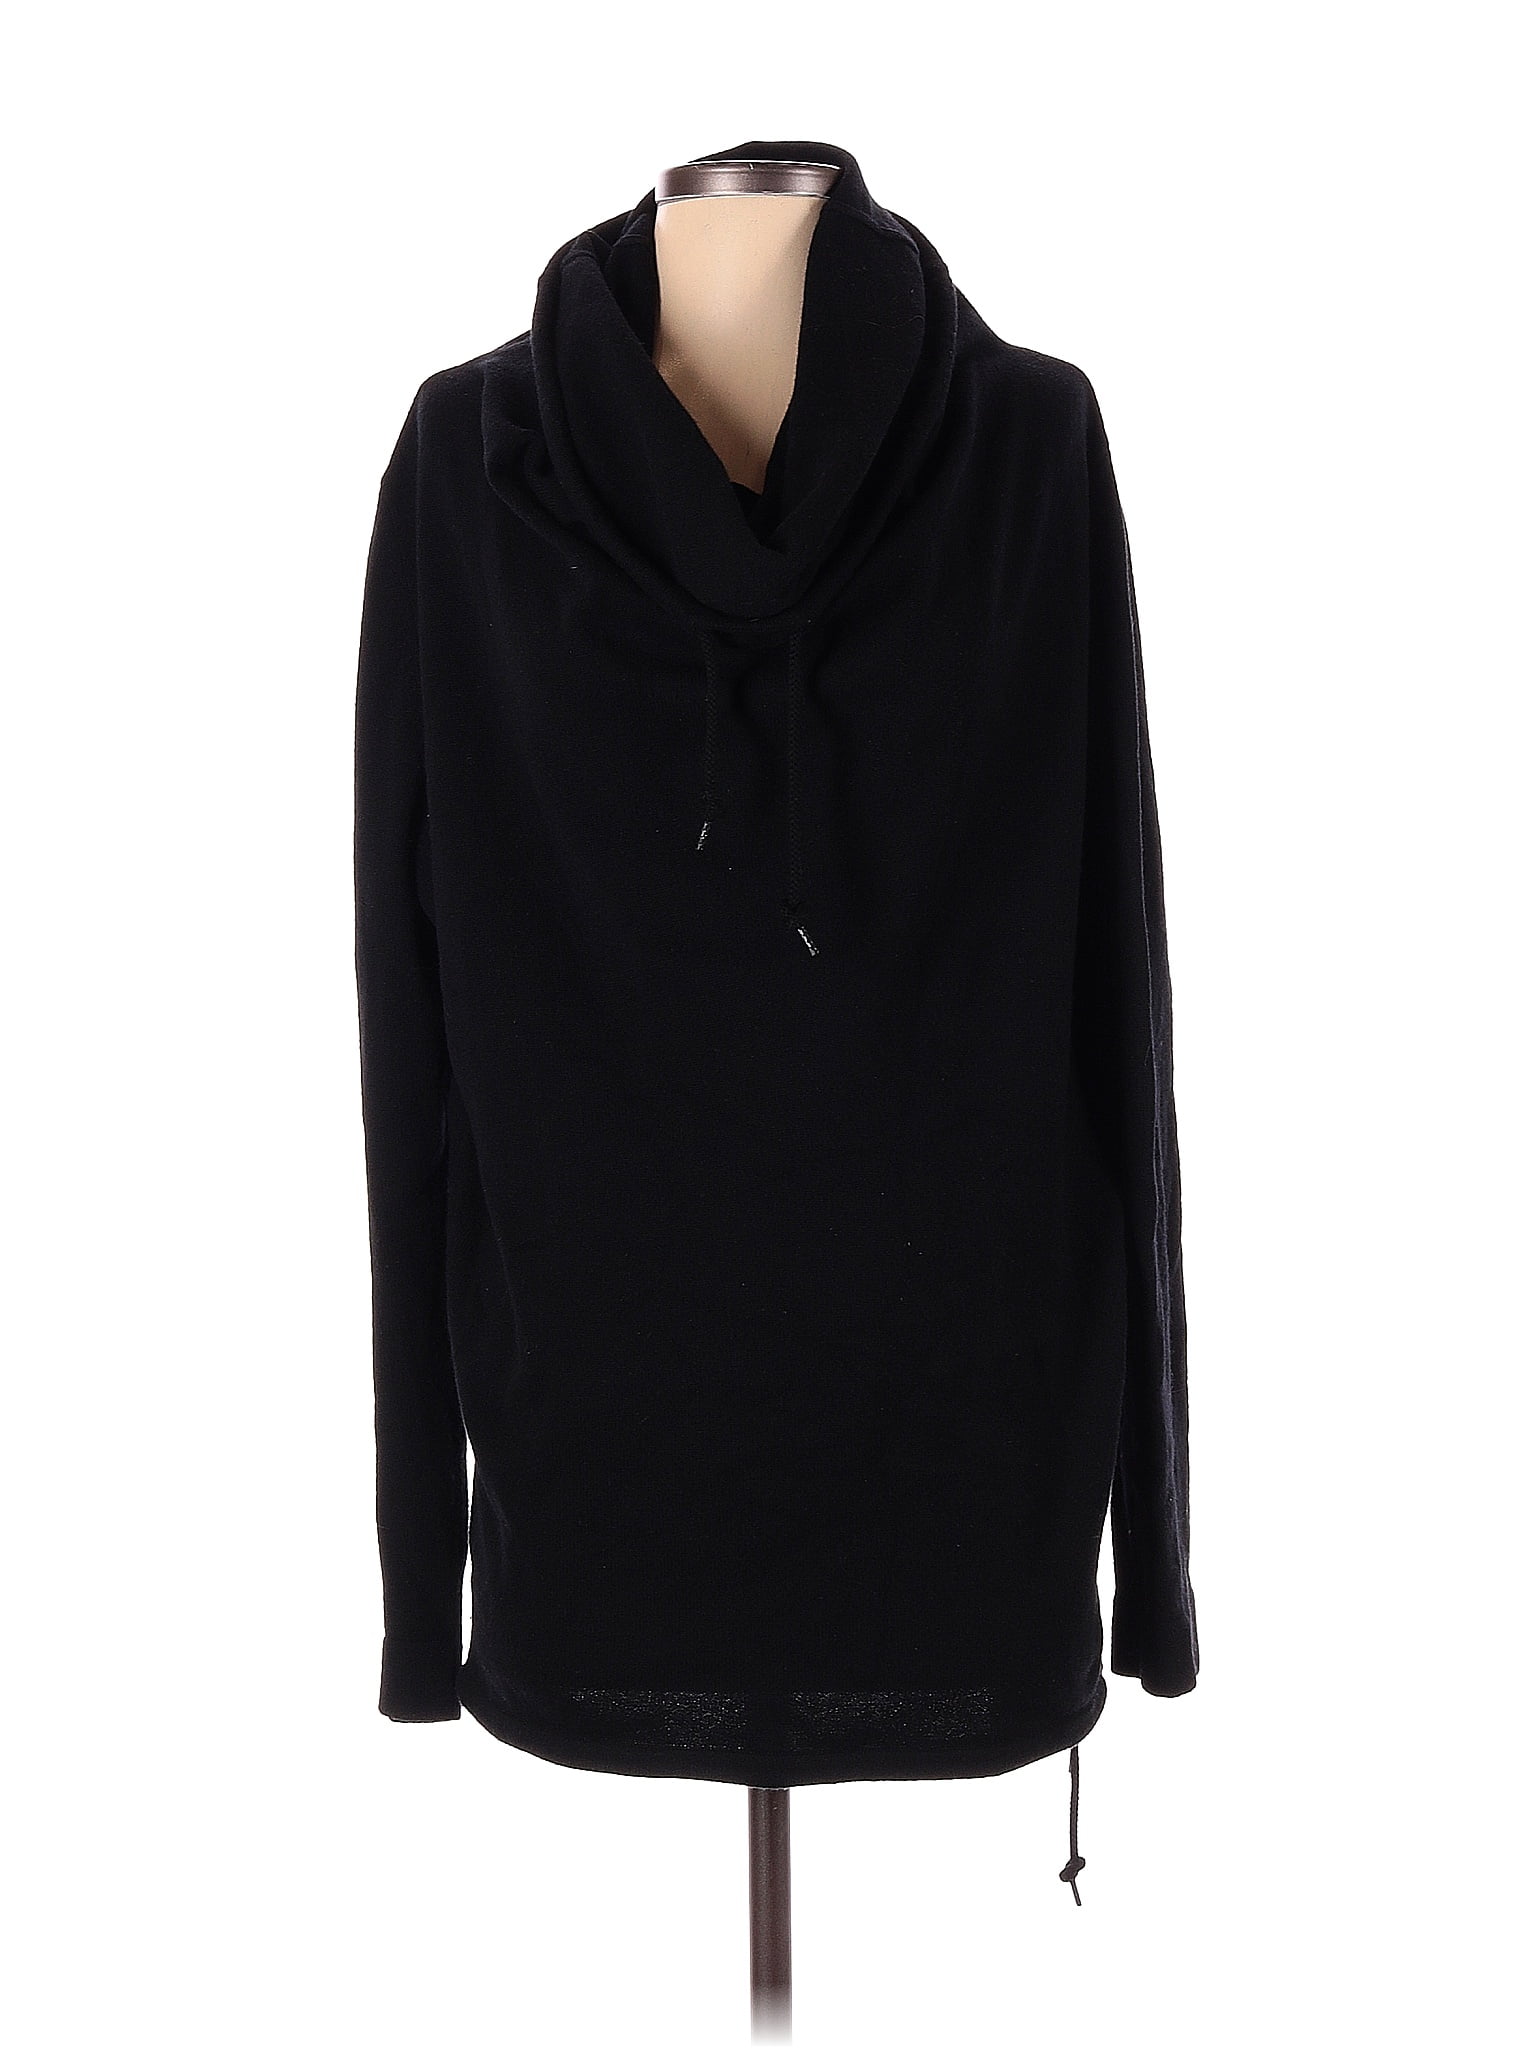 Akris Punto Black Pullover 84% off - 4 Sweater thredUP Size 